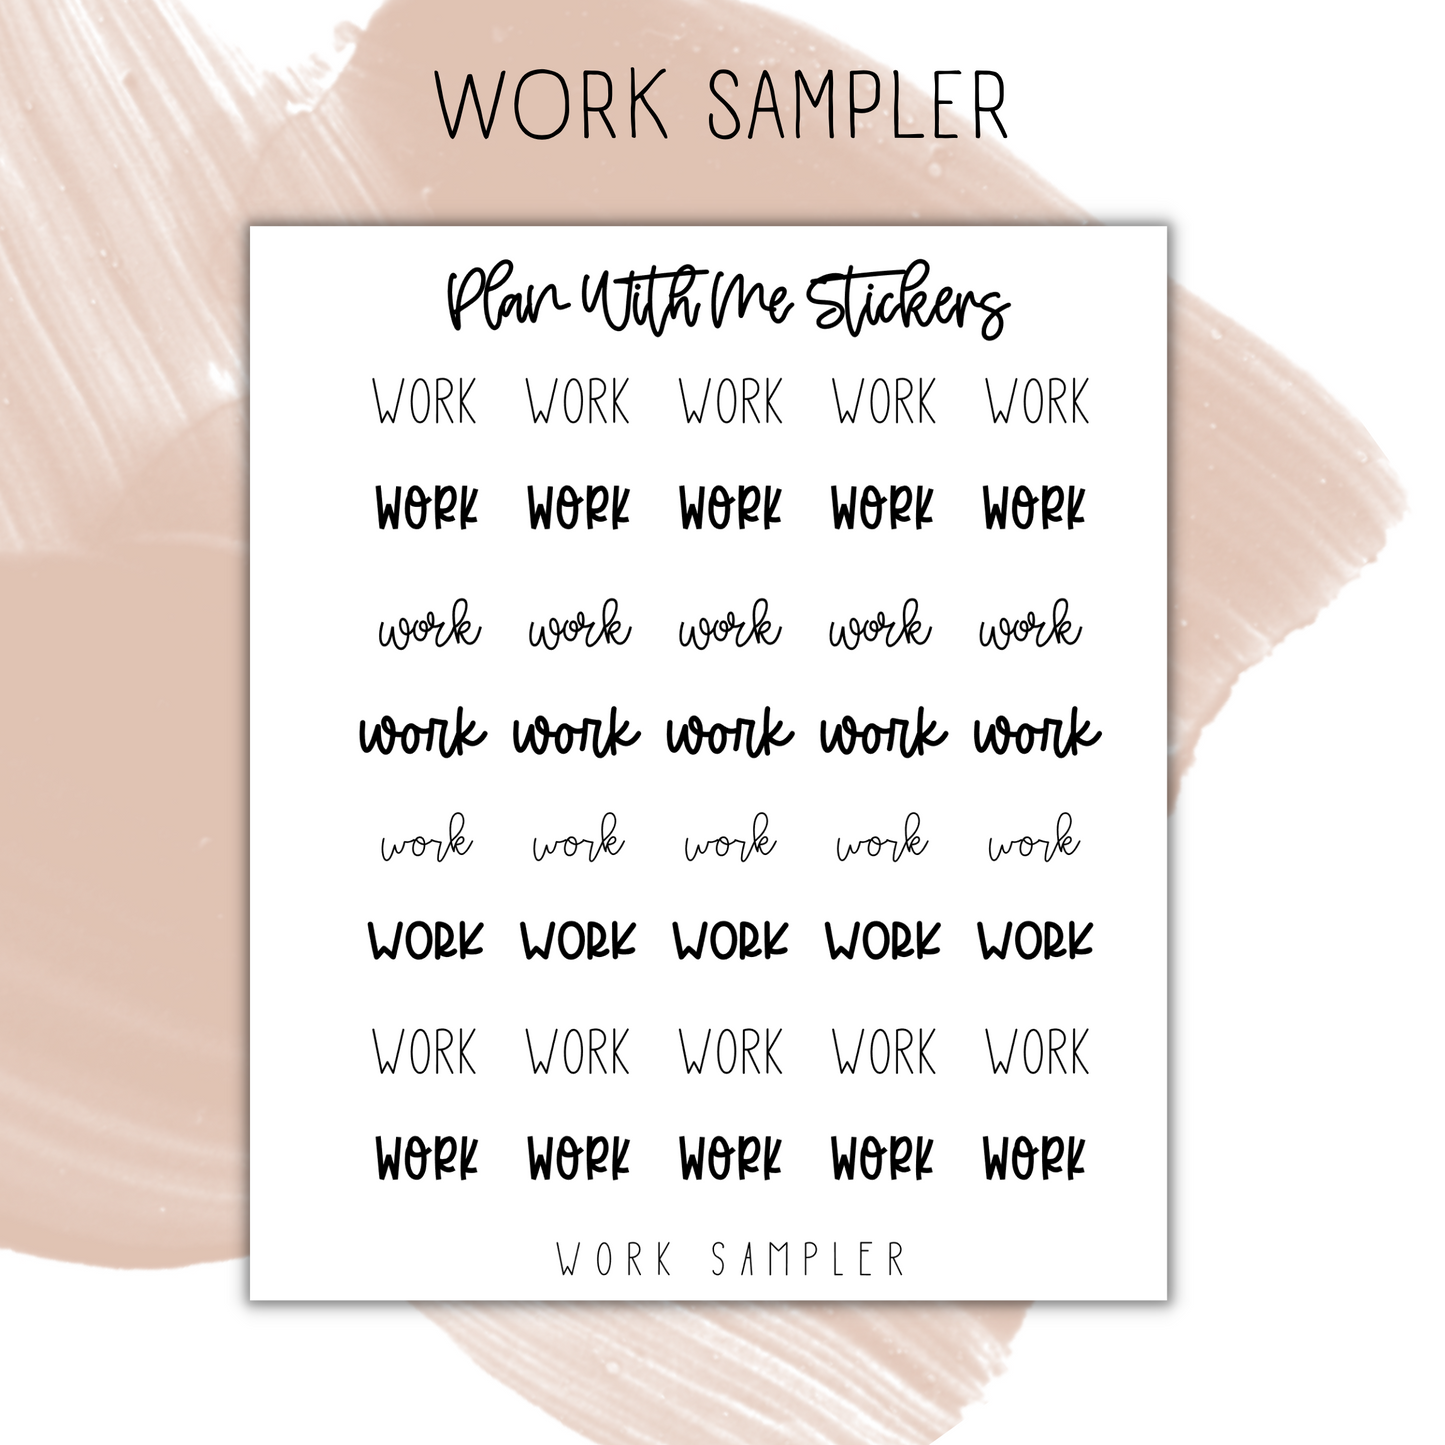 Work Sampler | Scripts